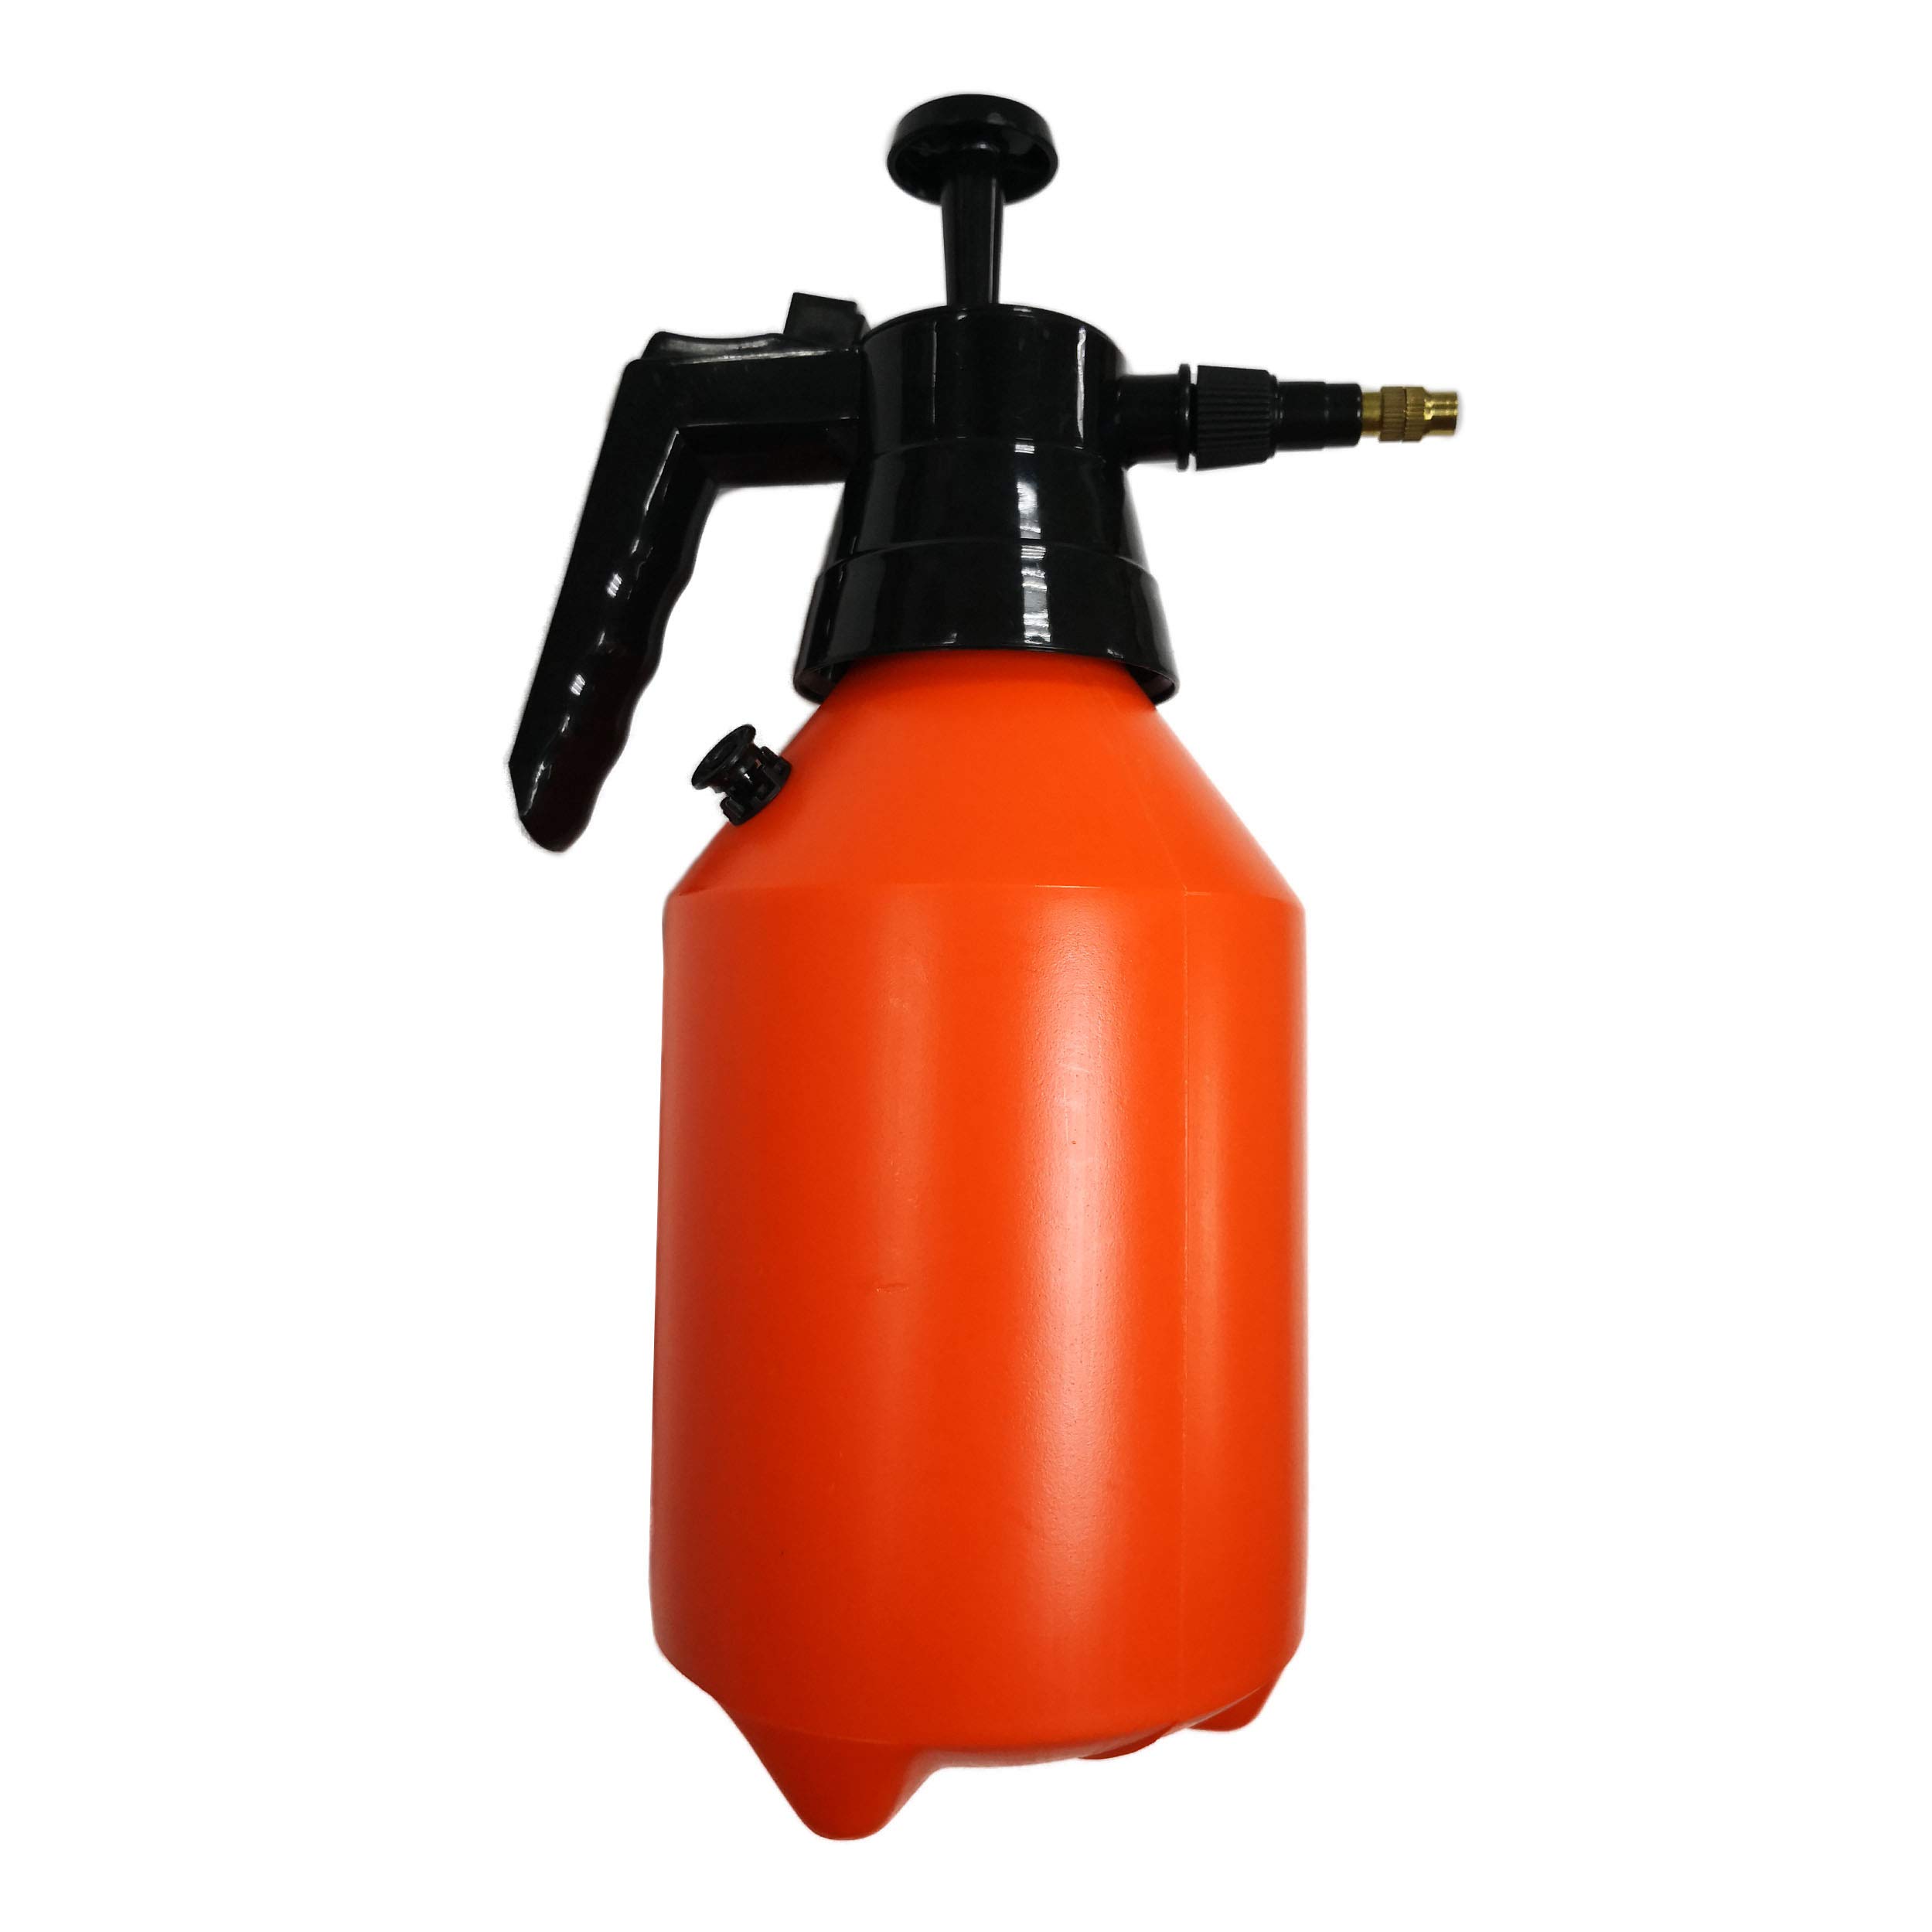 POLYTE One Hand Pressure Sprayer for Lawn, Garden, Pest Control, 50 oz / 1.5 Liter, 1 Pack